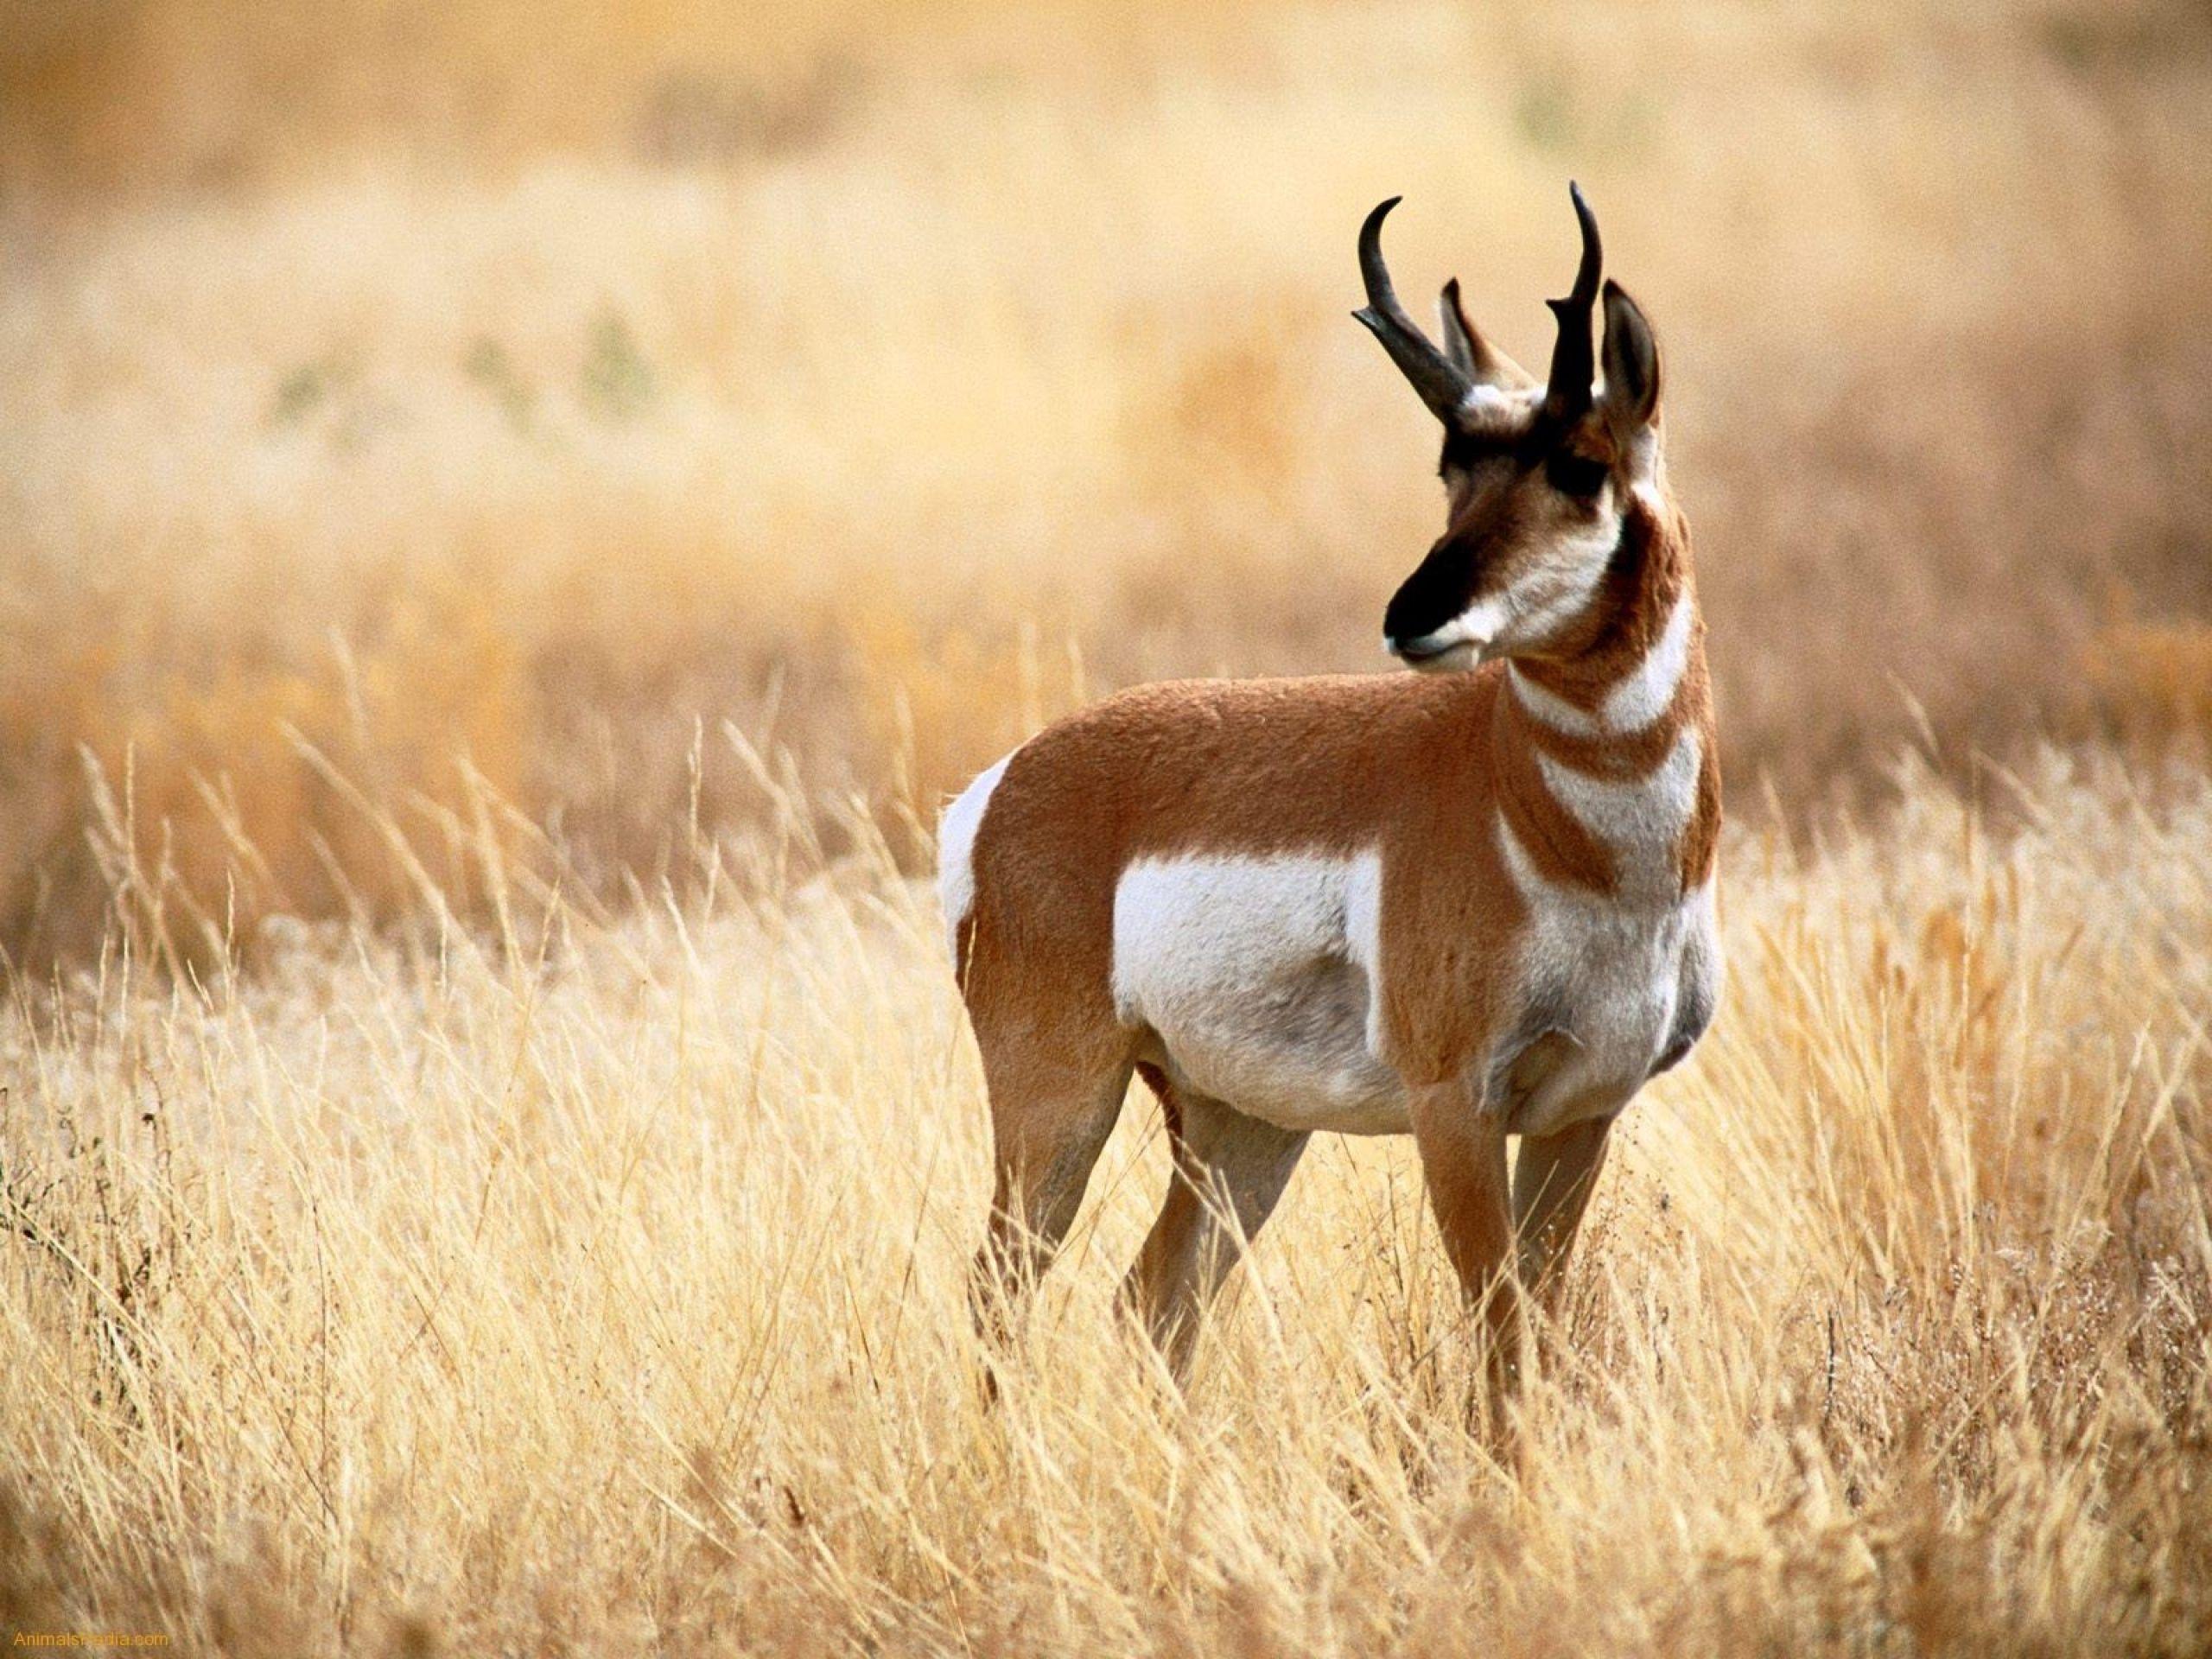 Antelope with horns image - Free stock photo - Public Domain photo ...